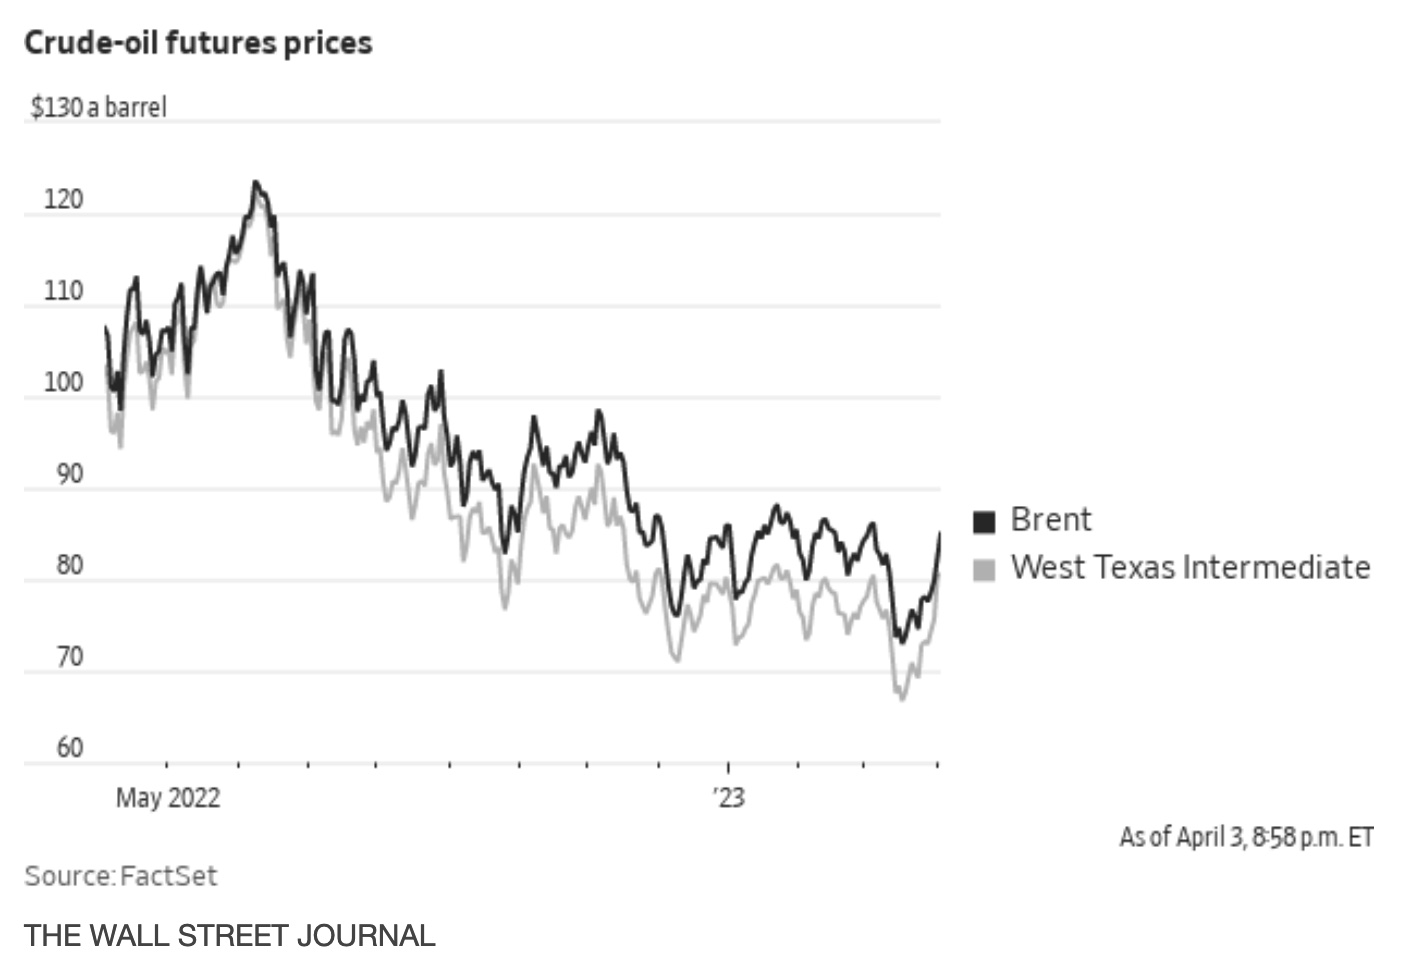 Crude prices